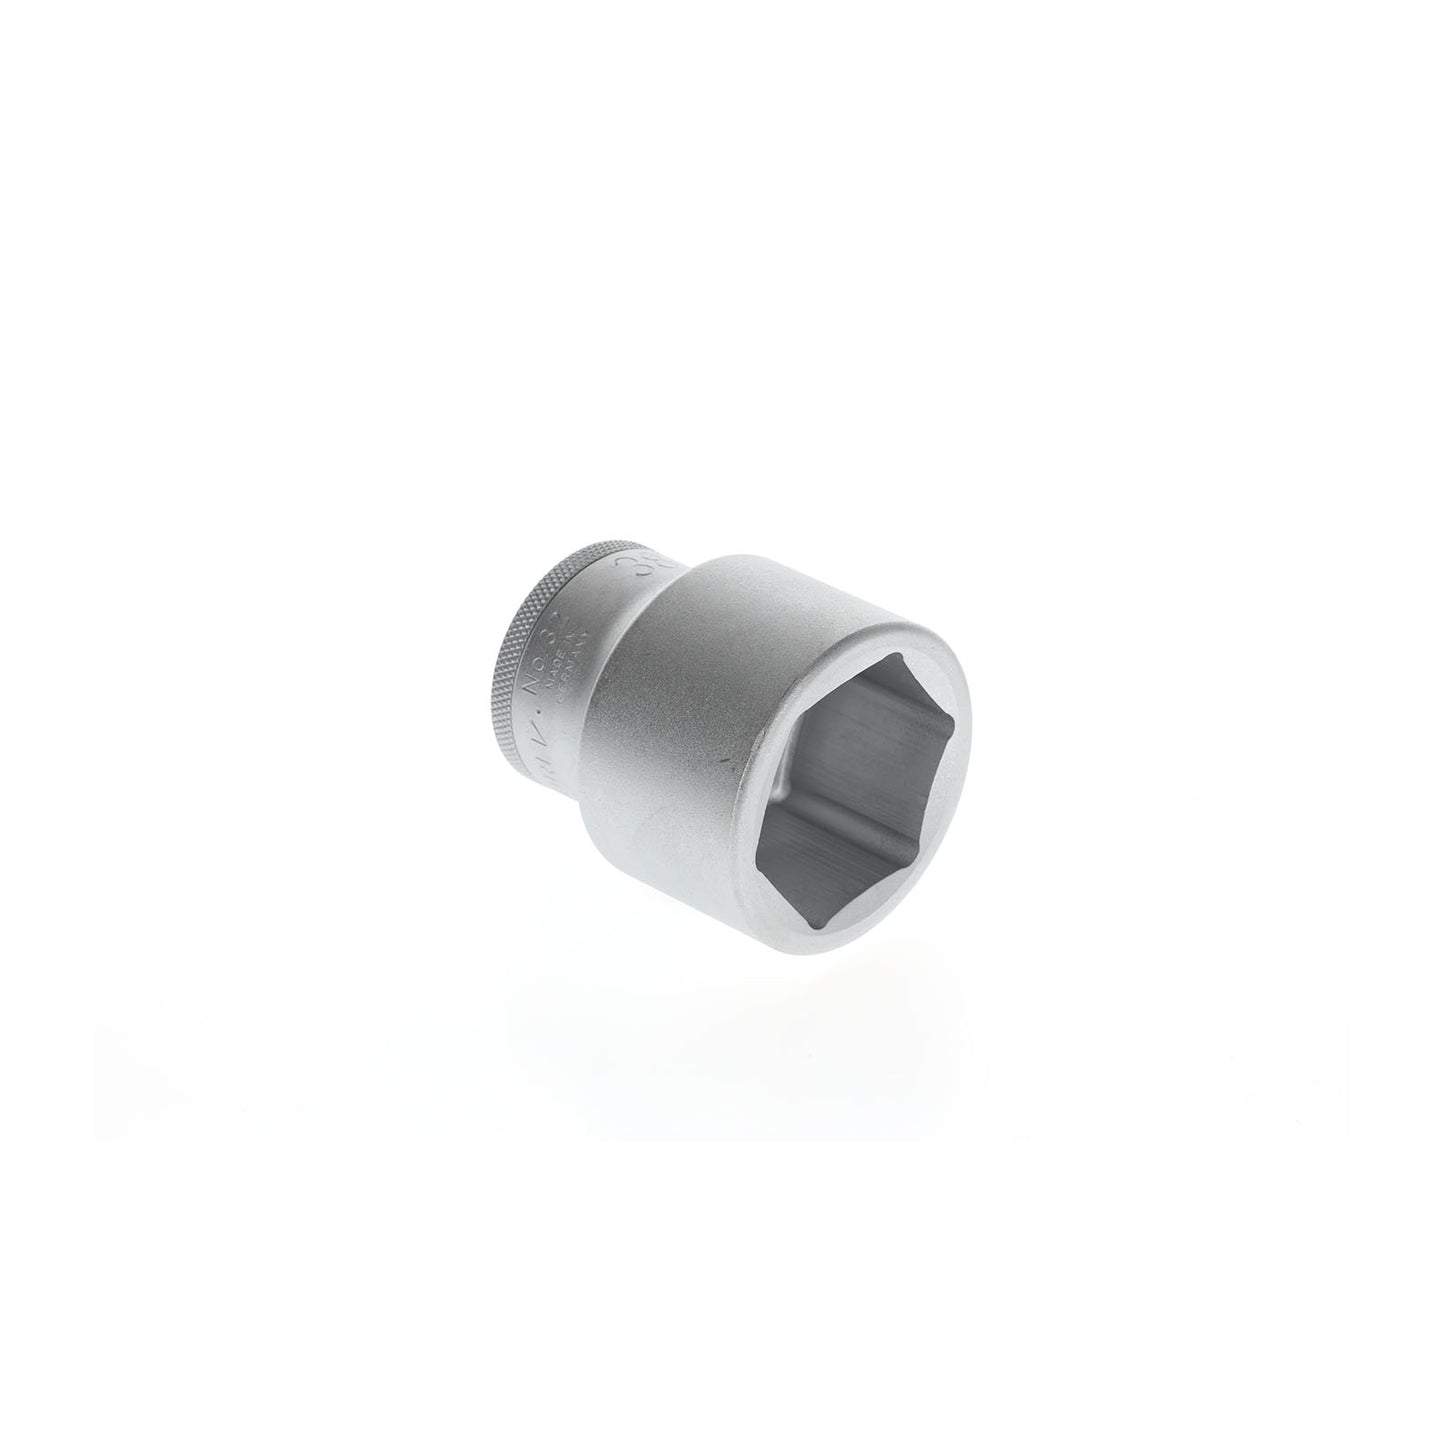 GEDORE 32 38 - Hexagonal socket 3/4", 38 mm (6271000)